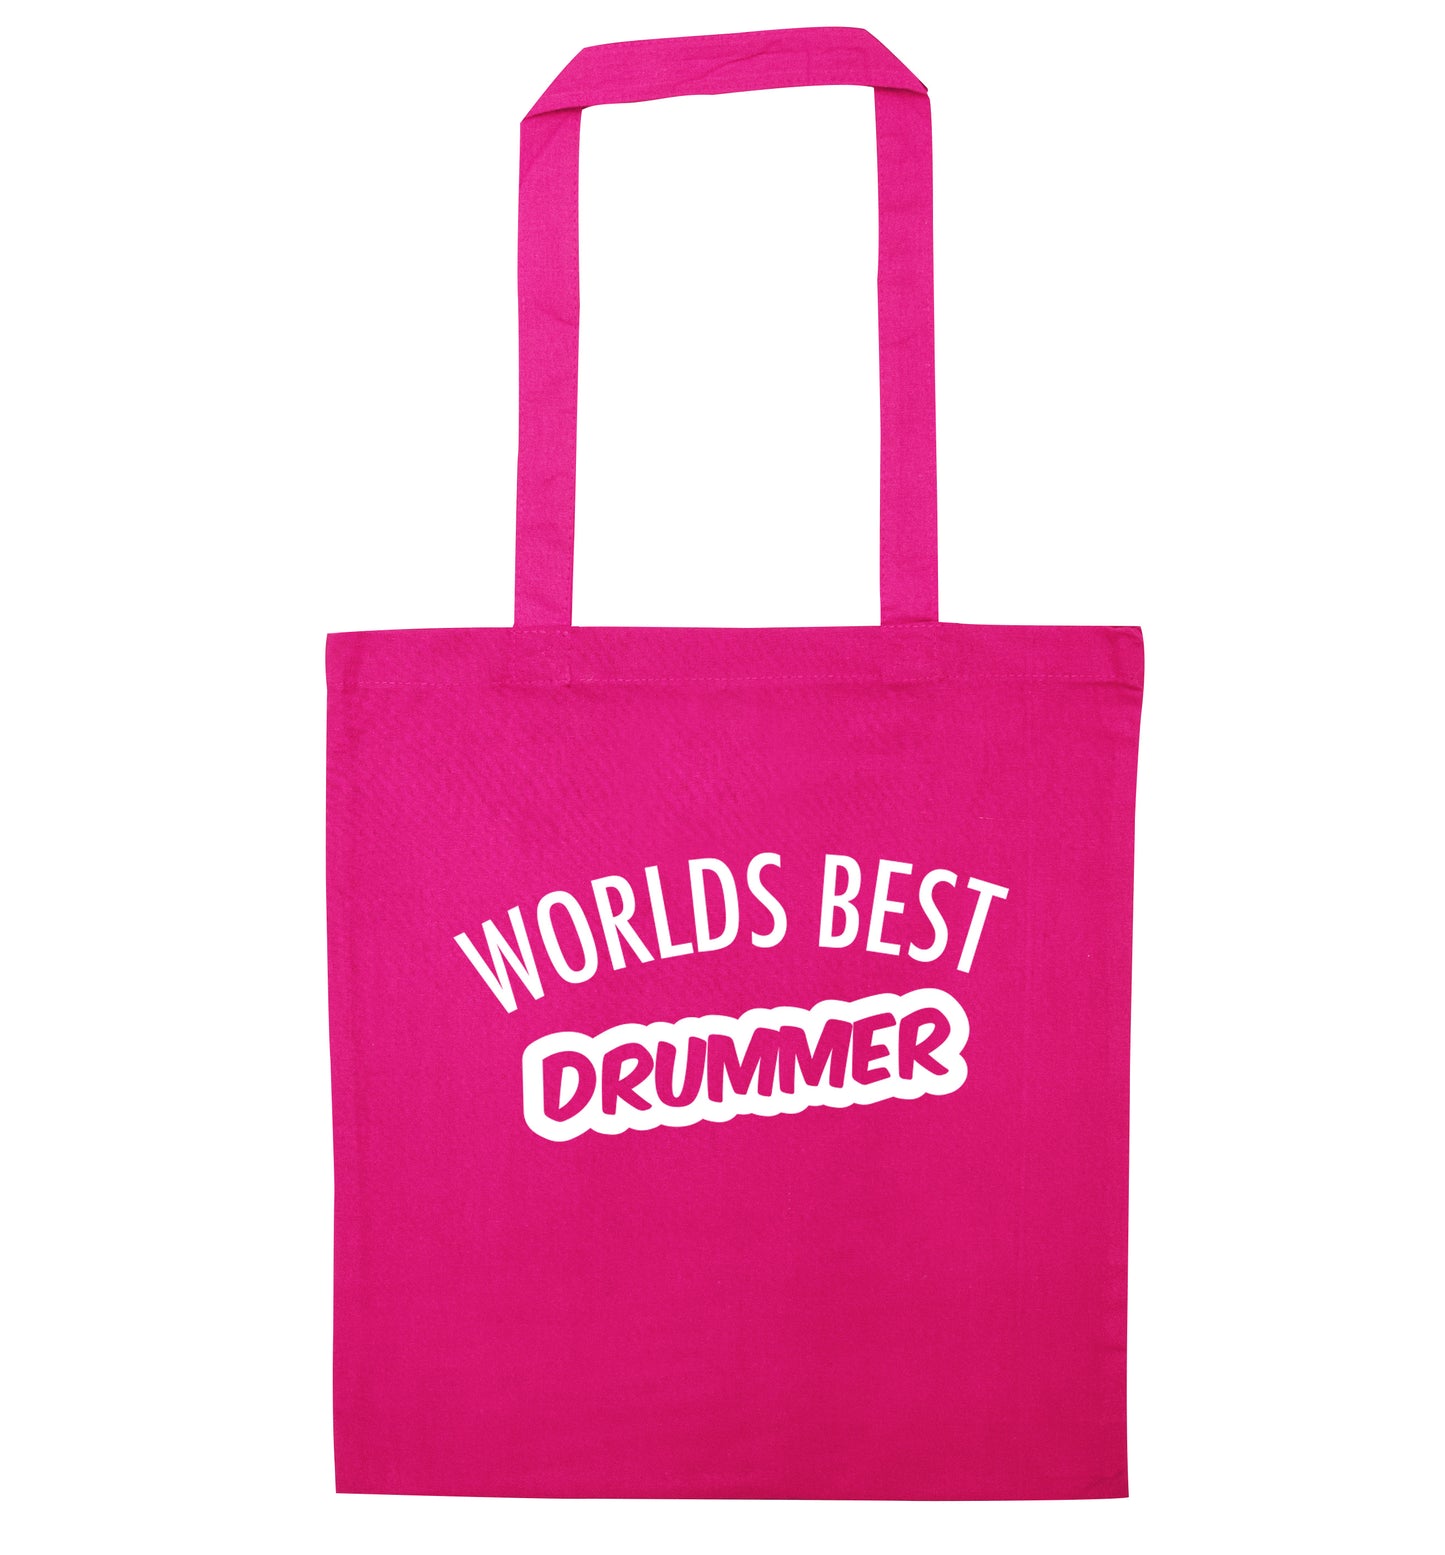 Worlds best drummer pink tote bag